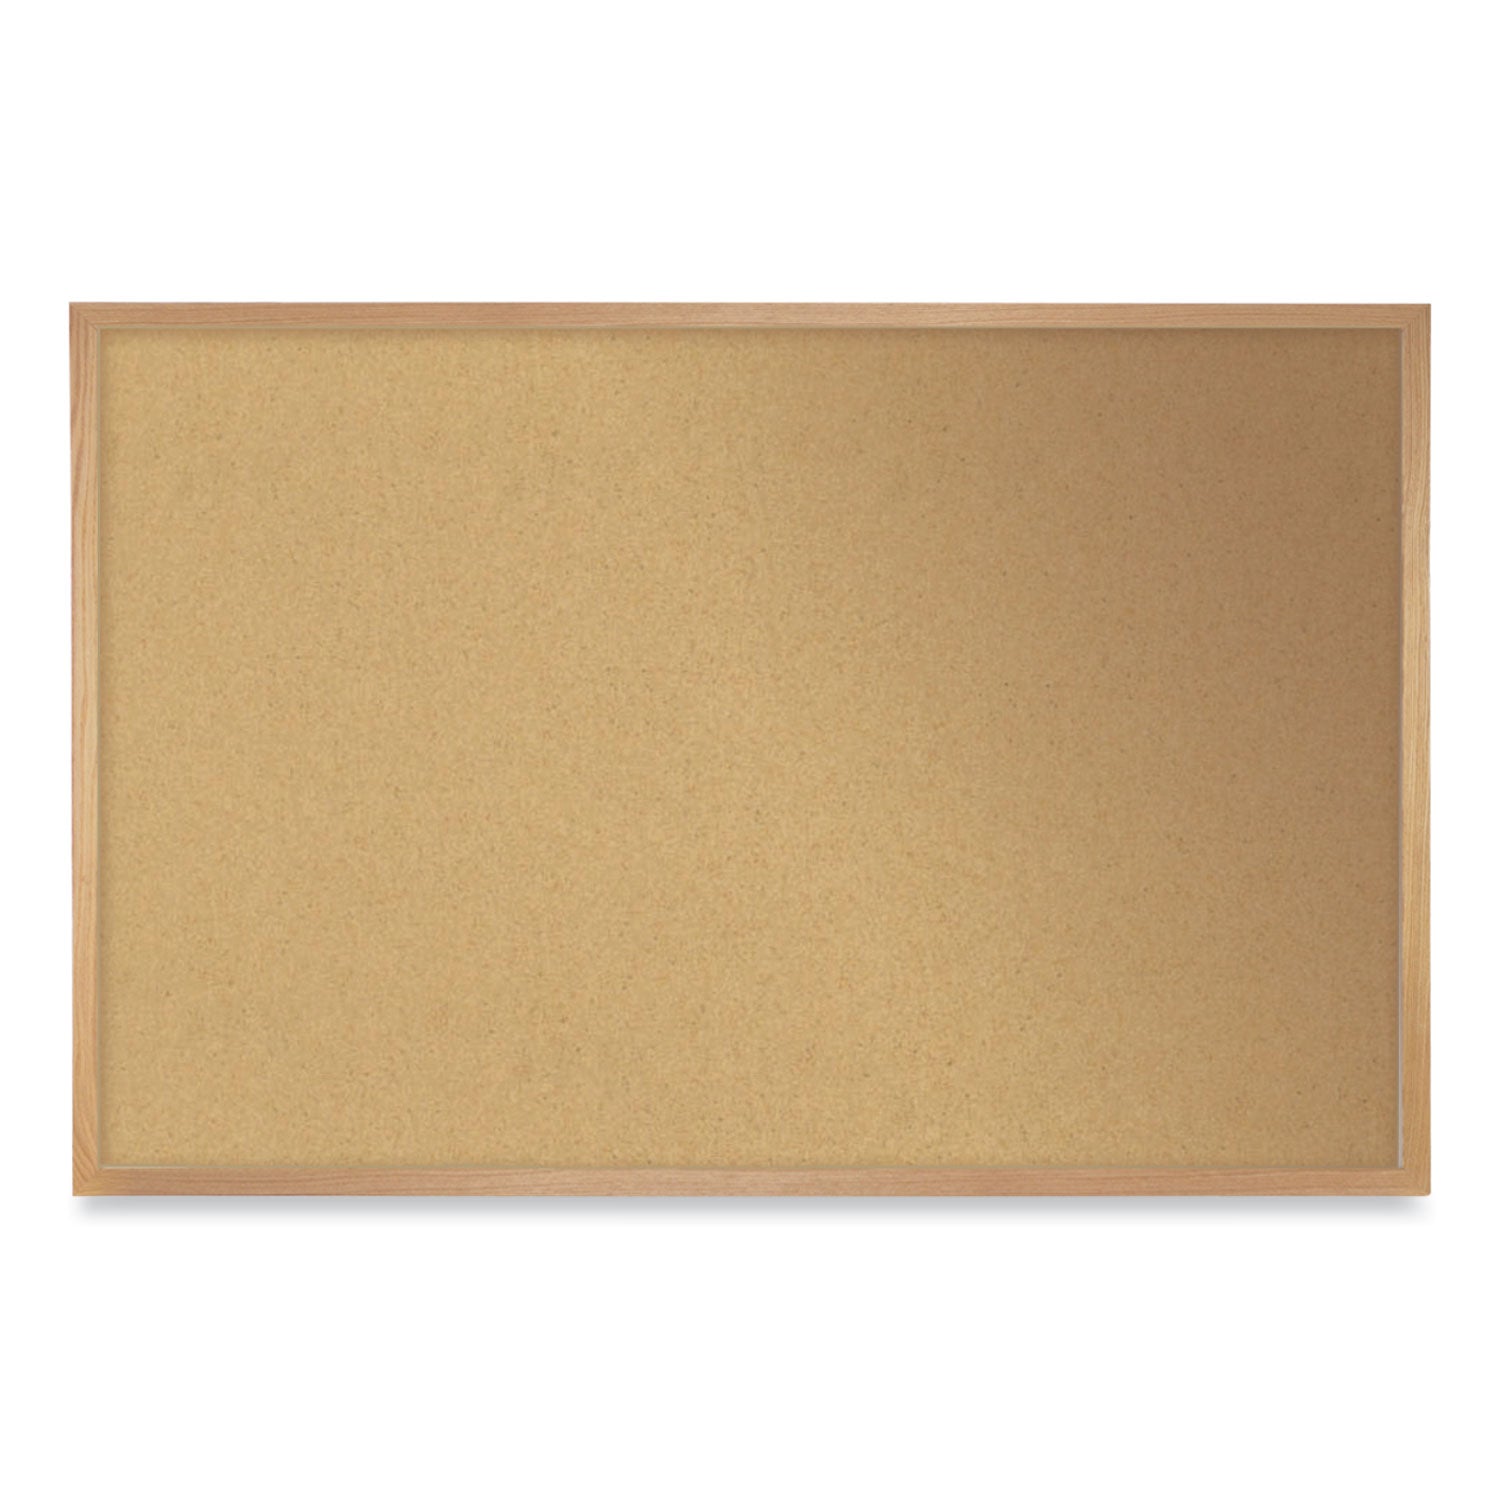 natural-cork-bulletin-board-with-frame-605-x-365-tan-surface-oak-frame-ships-in-7-10-business-days_ghewk35 - 1